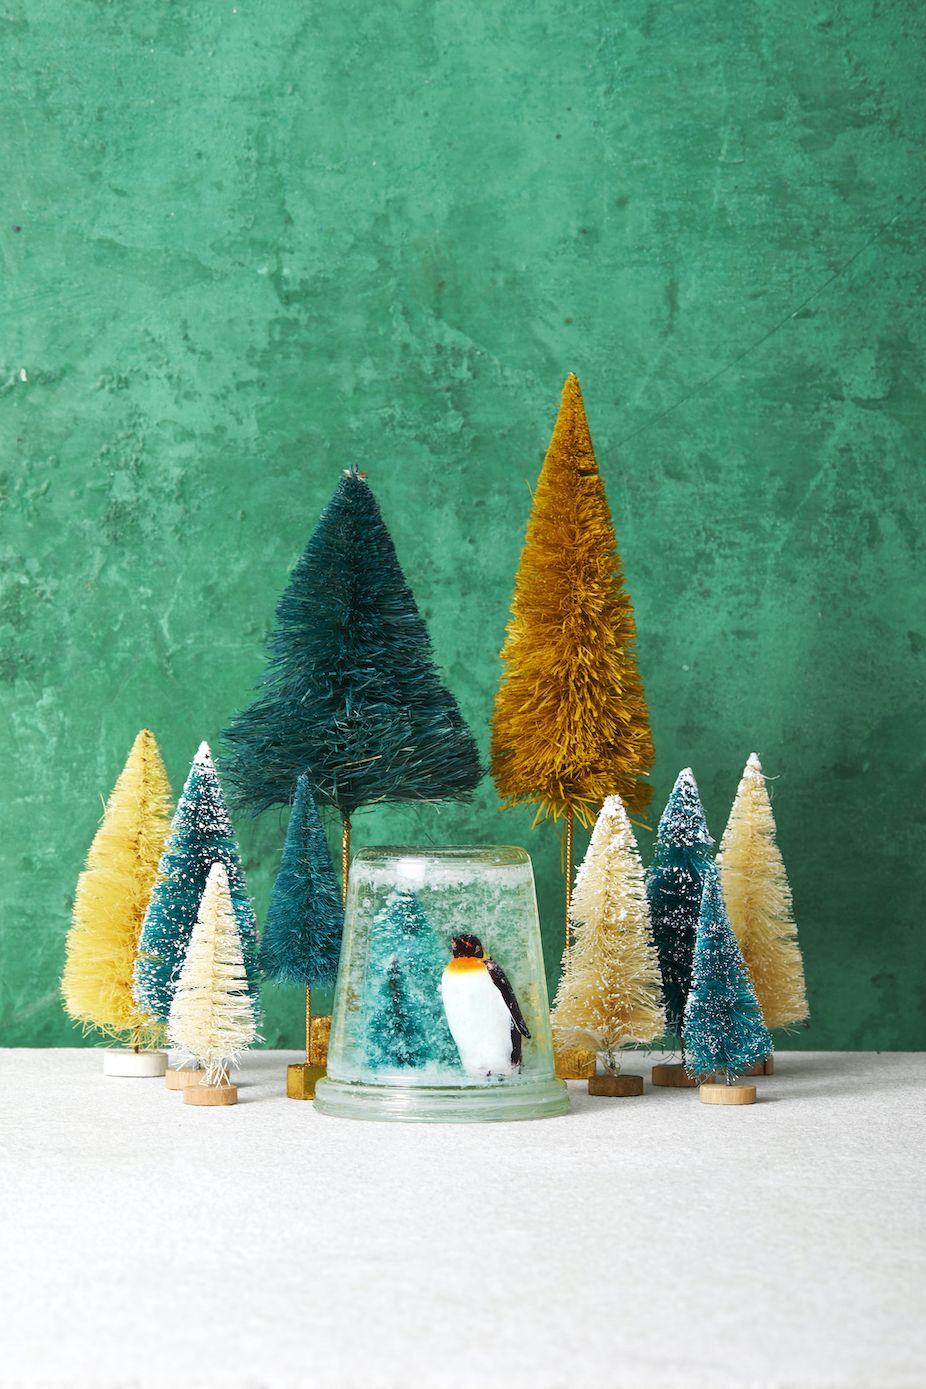 5 Inspirational Christmas Craft Ideas for Kids